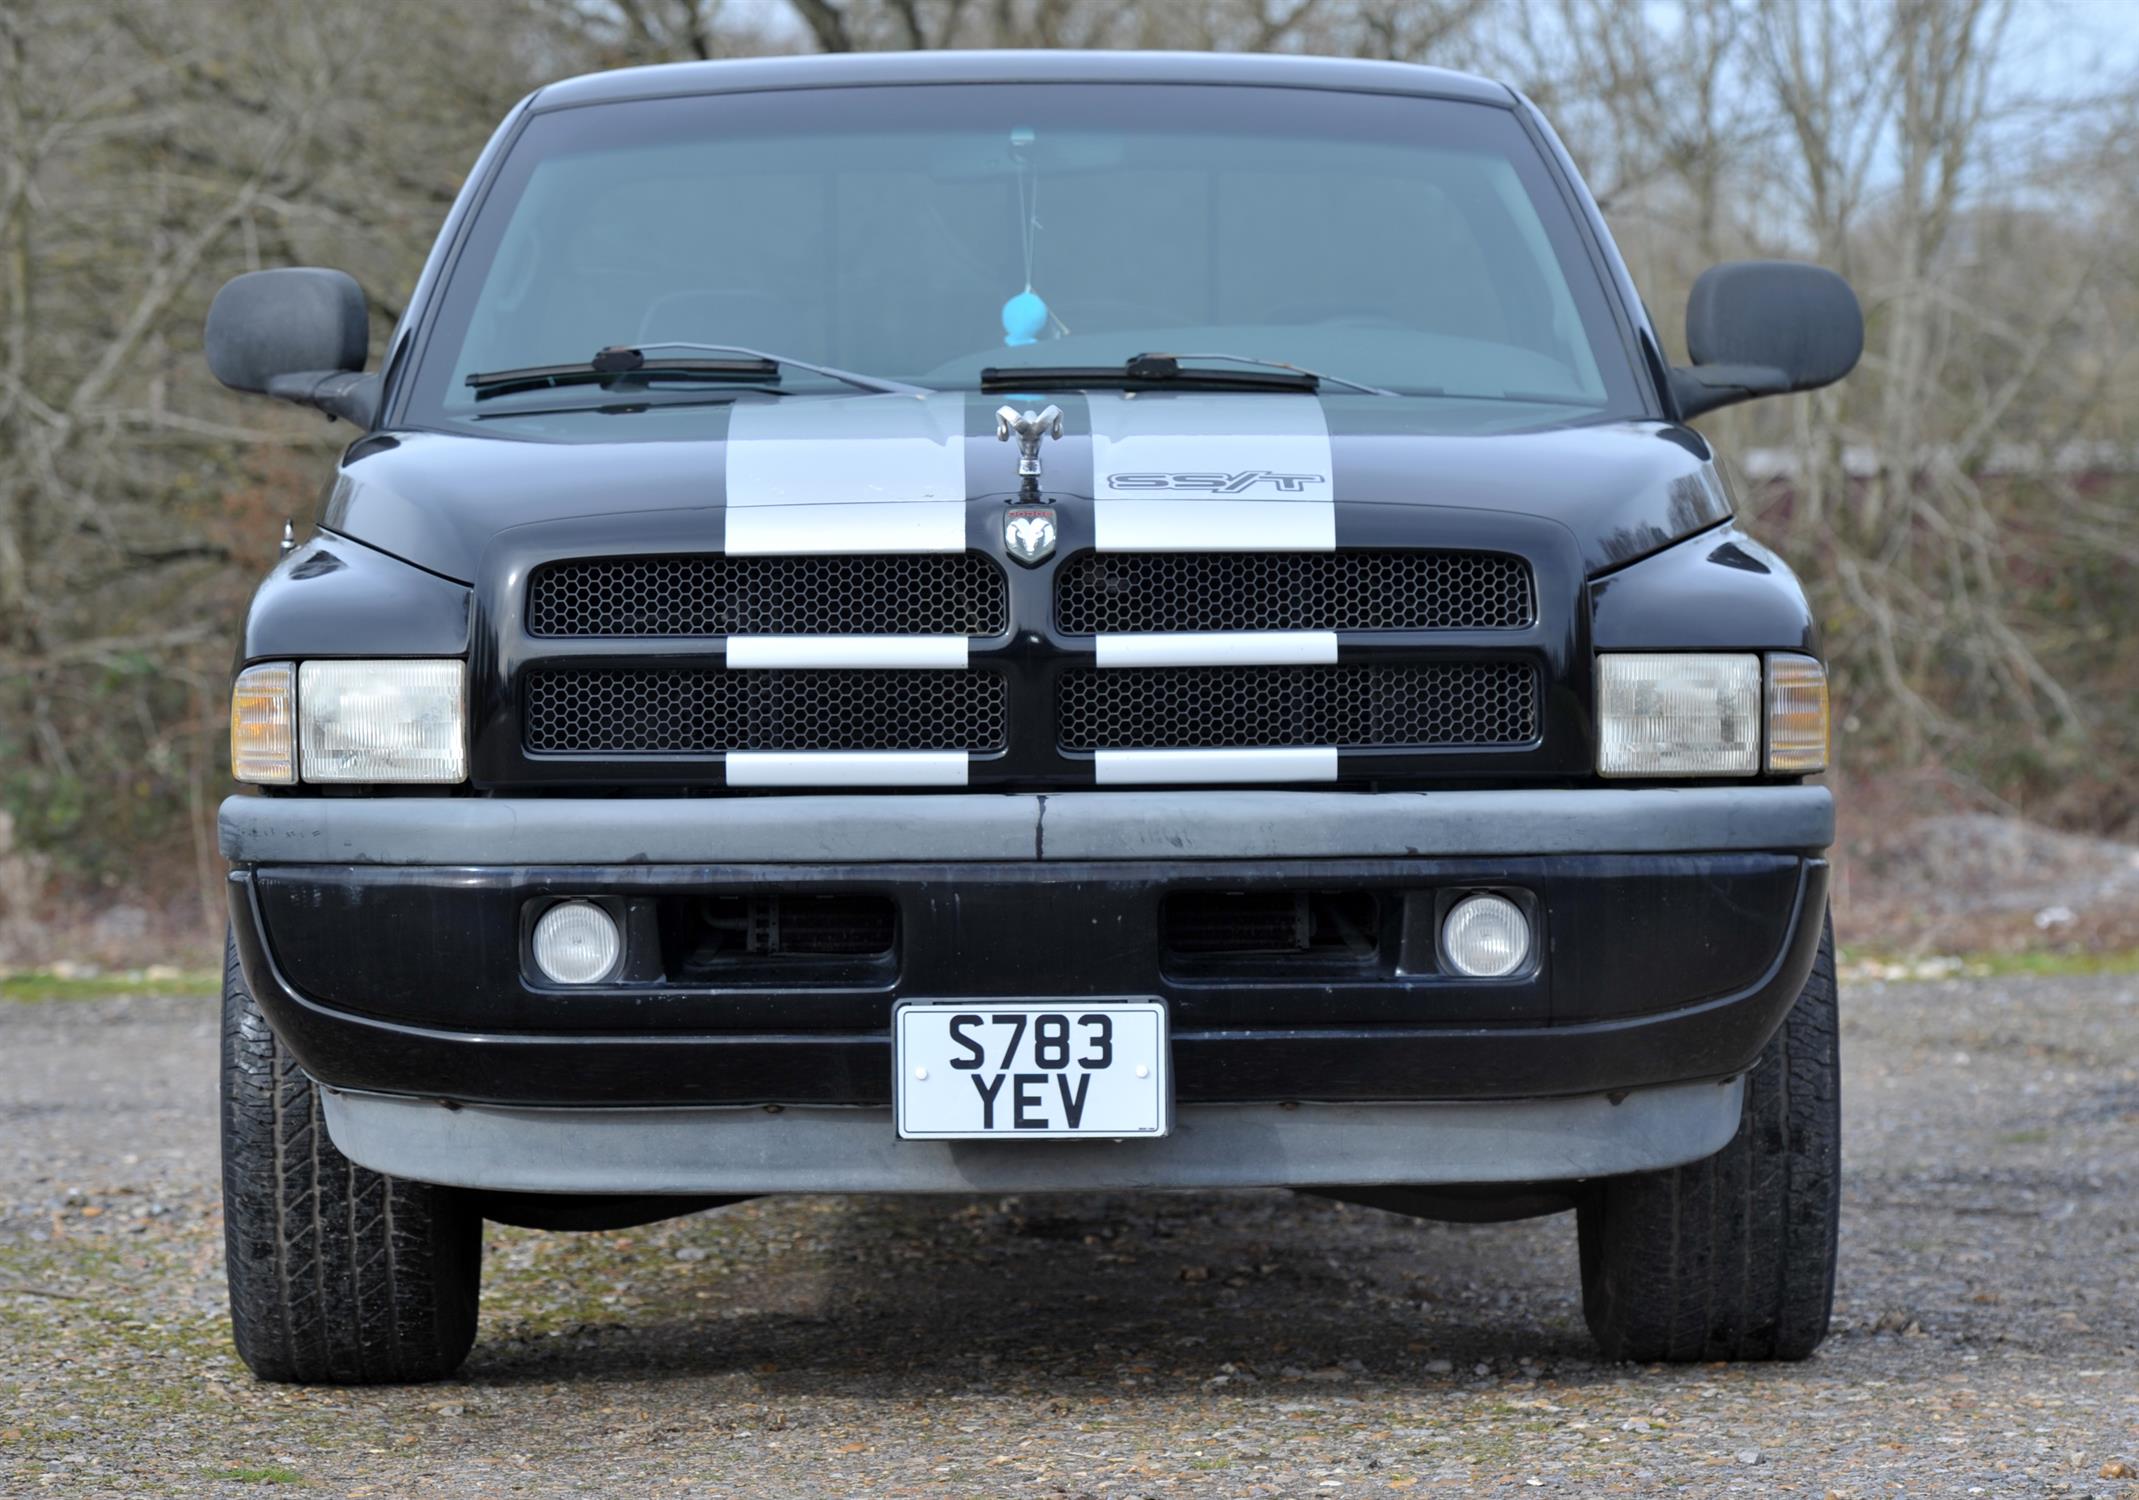 1998 Dodge Ram 1500 SS/T. 5.9 V8 Petrol Automatic.  Registration number: S783 YEV. - Image 3 of 13